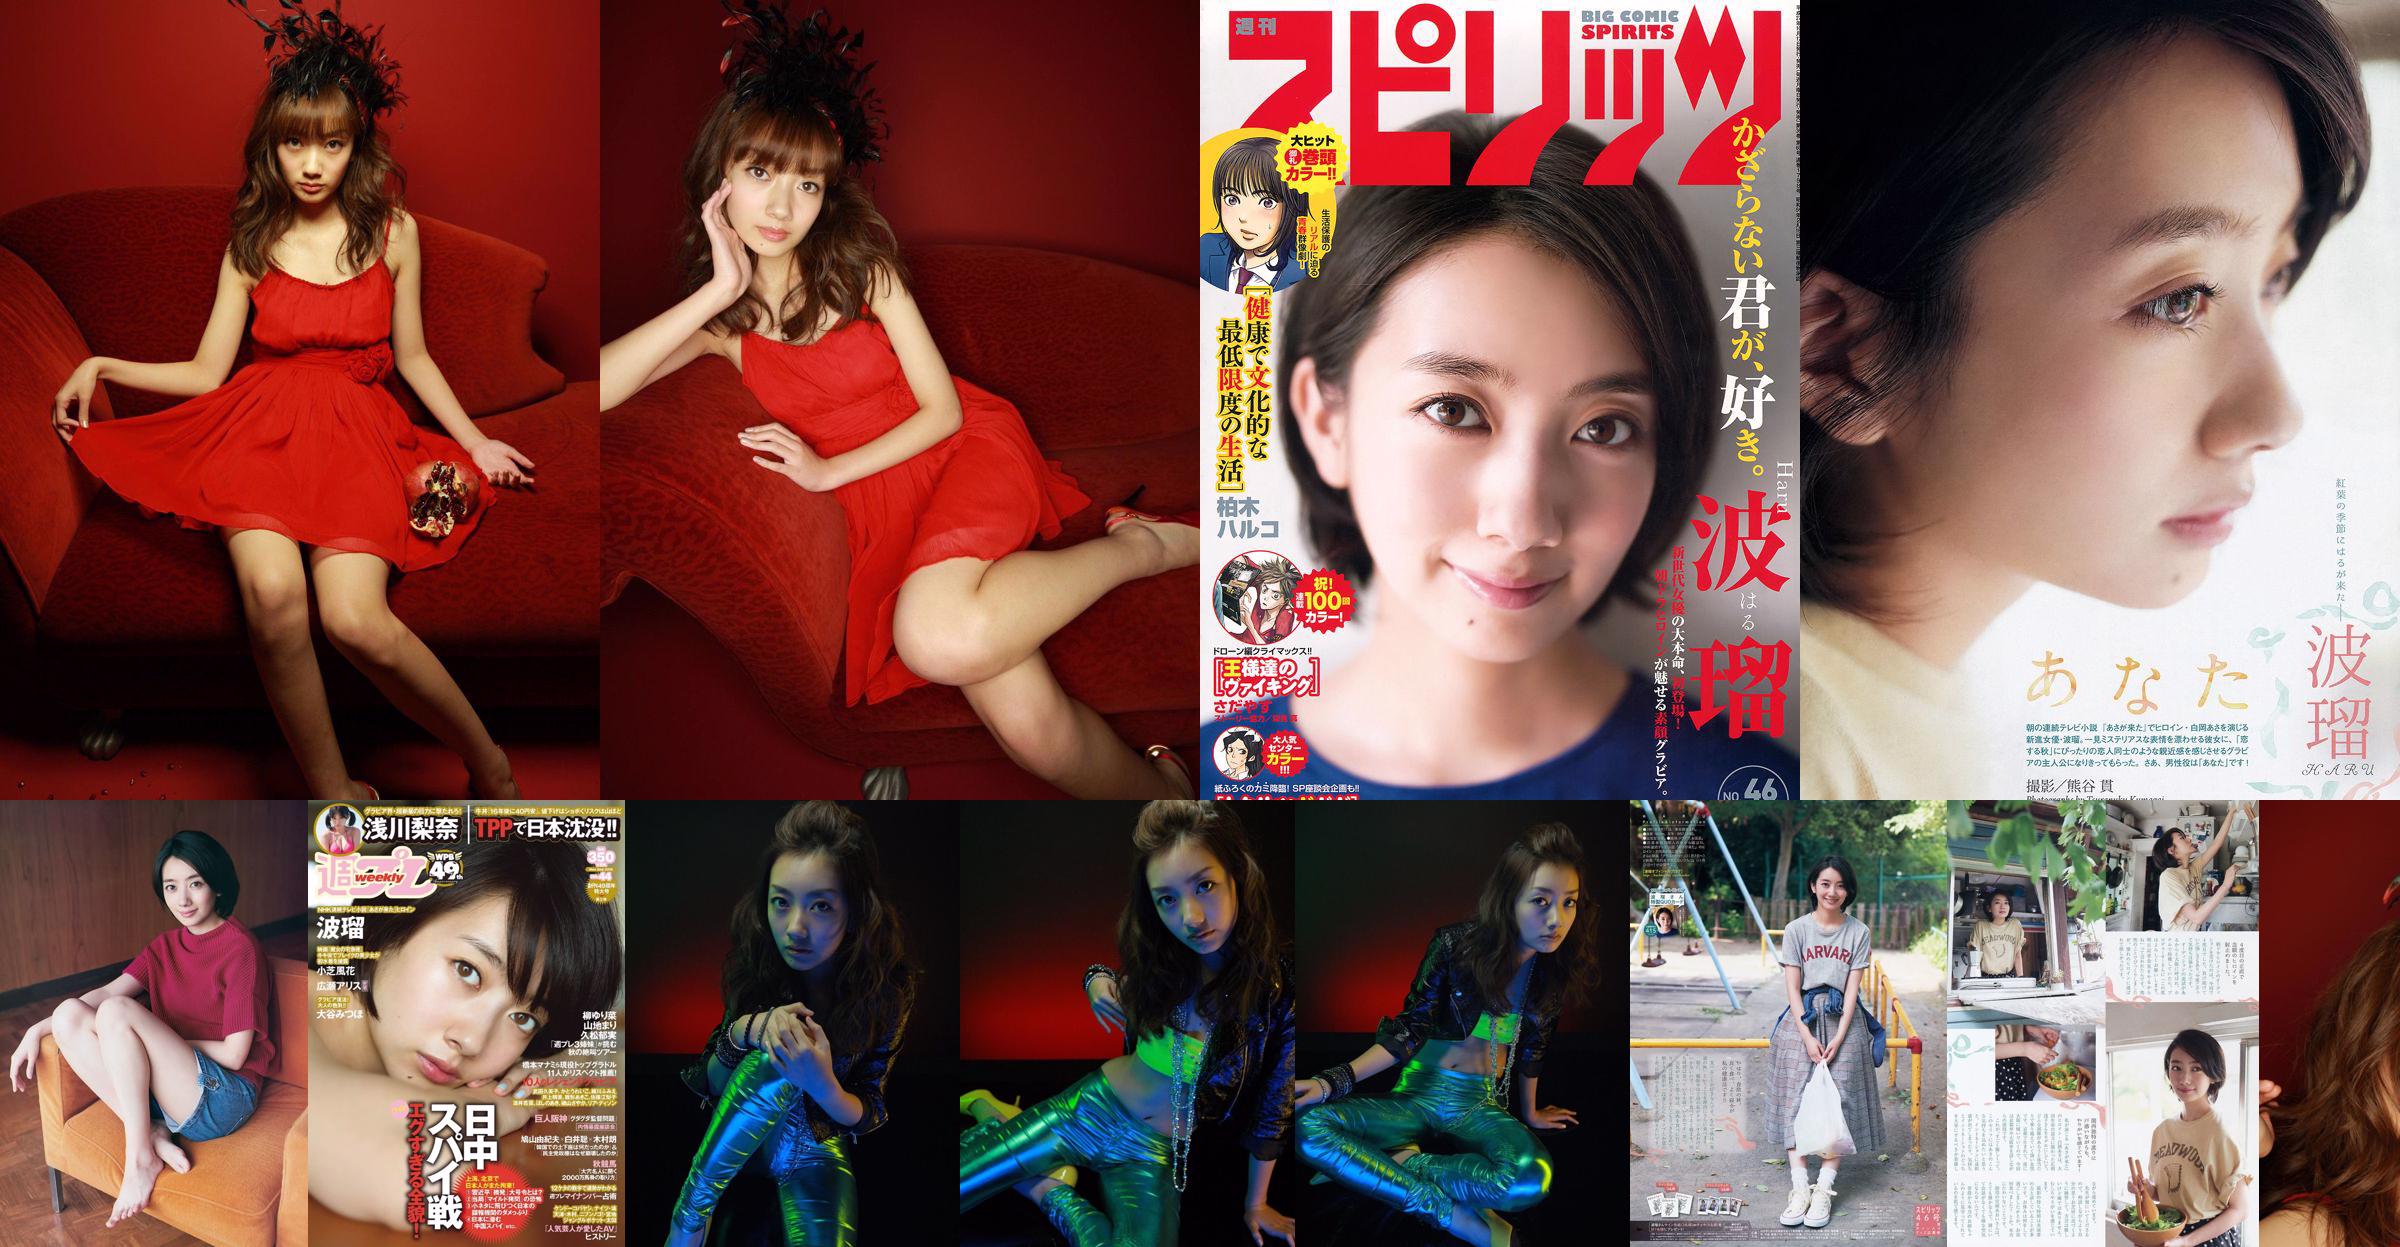 Haru, Asagawa Rina, Xiaozhi Fenghua, 広瀬アリス, Otani みつほ [Weekly Playboy] 2015 No.44 Photo Magazine No.0cfe3b Page 1